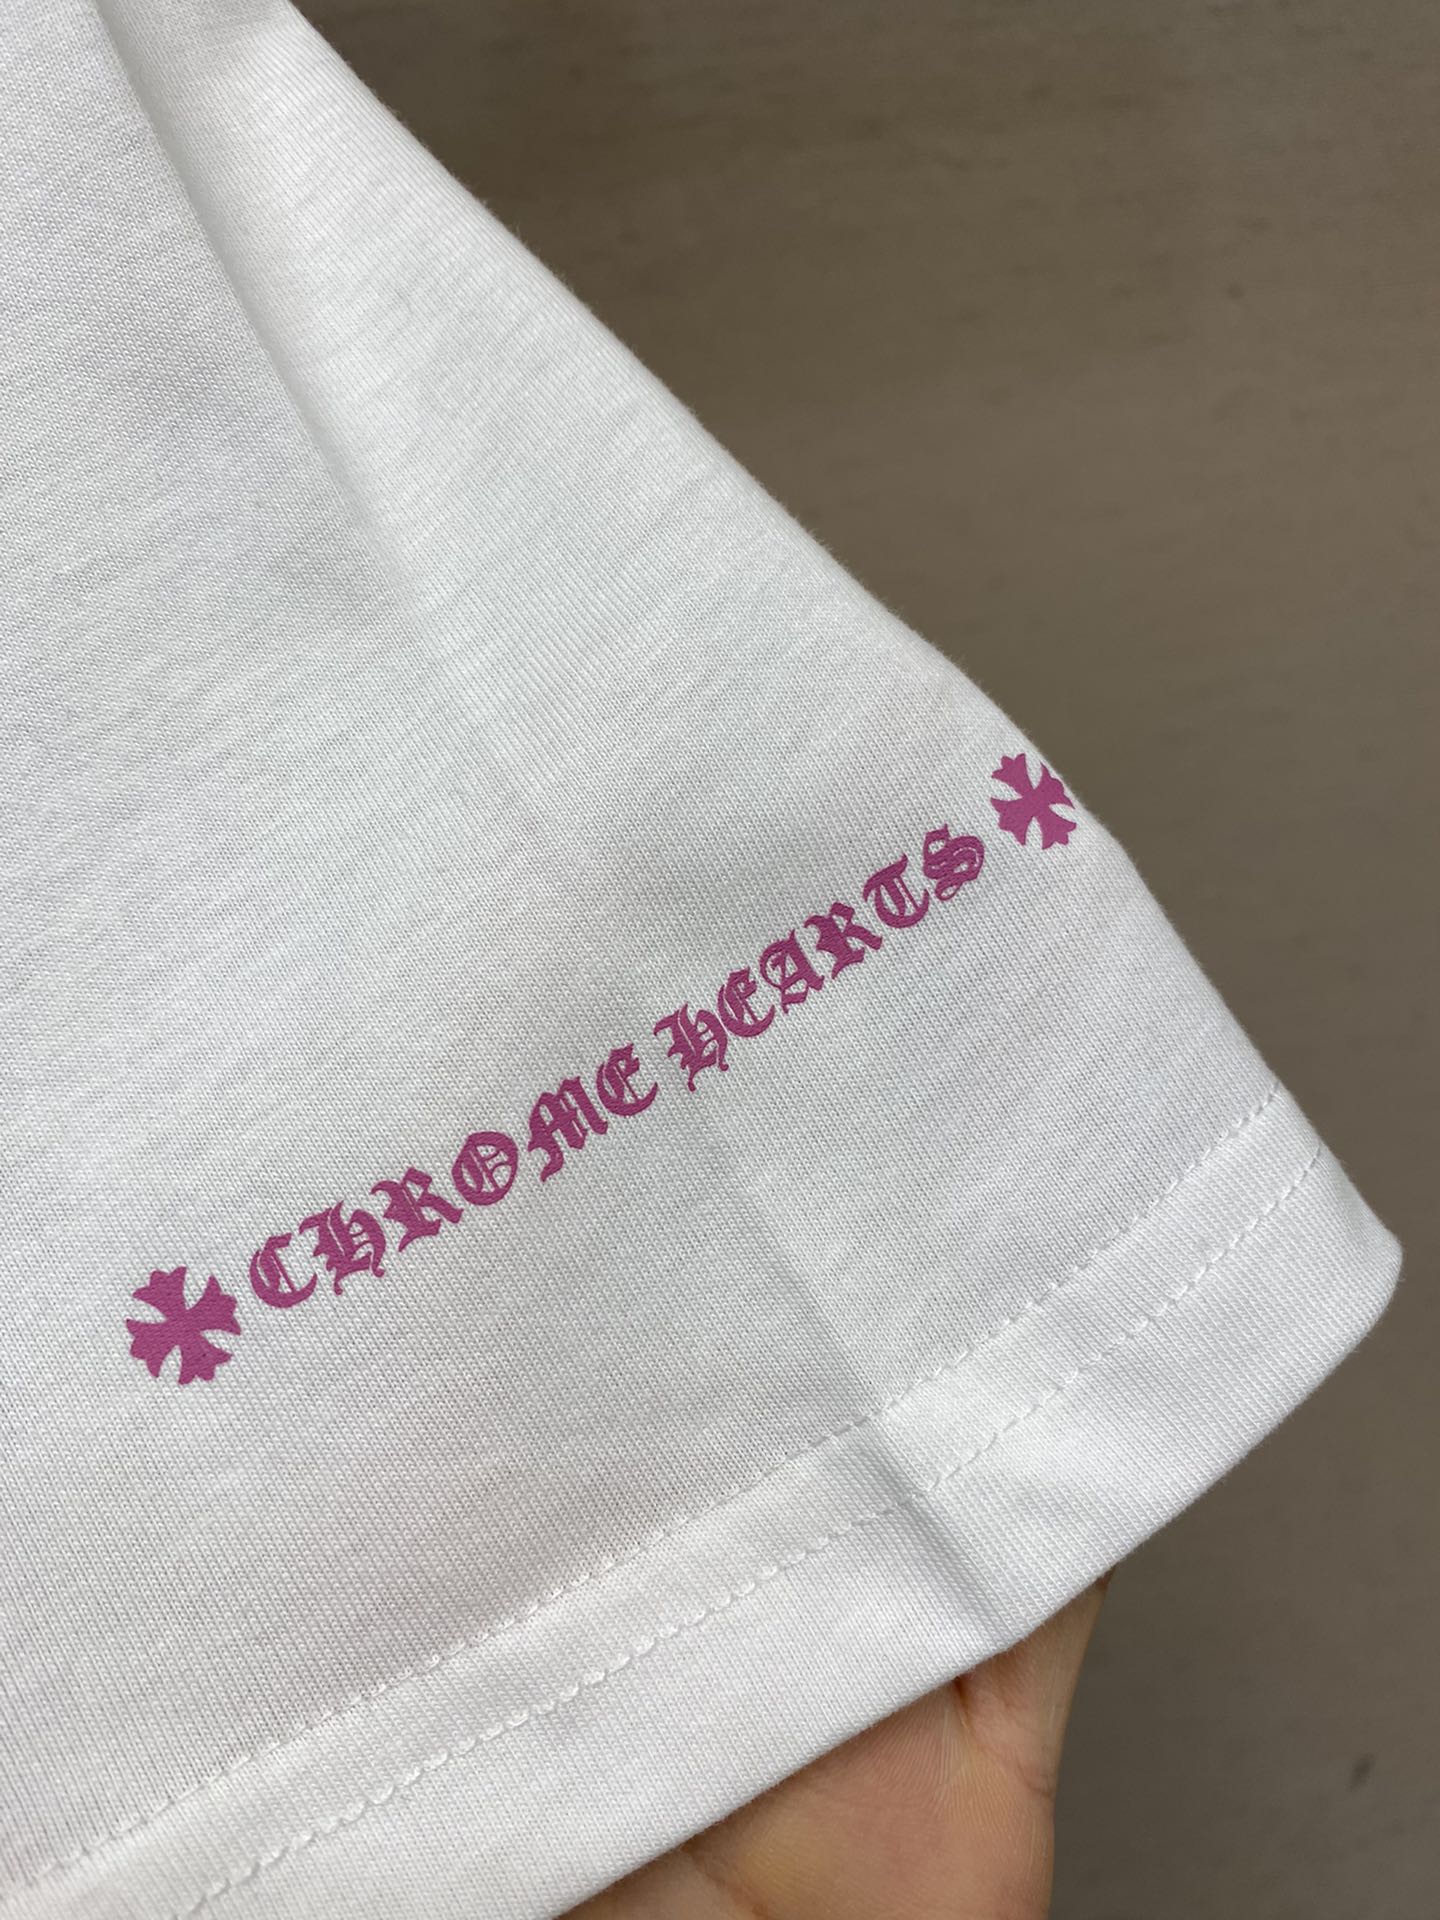 CheomeHeaet克罗心SS情侣款领口logo短袖T恤精细的做工和上乘的质感一贯地标签化显著一眼即可